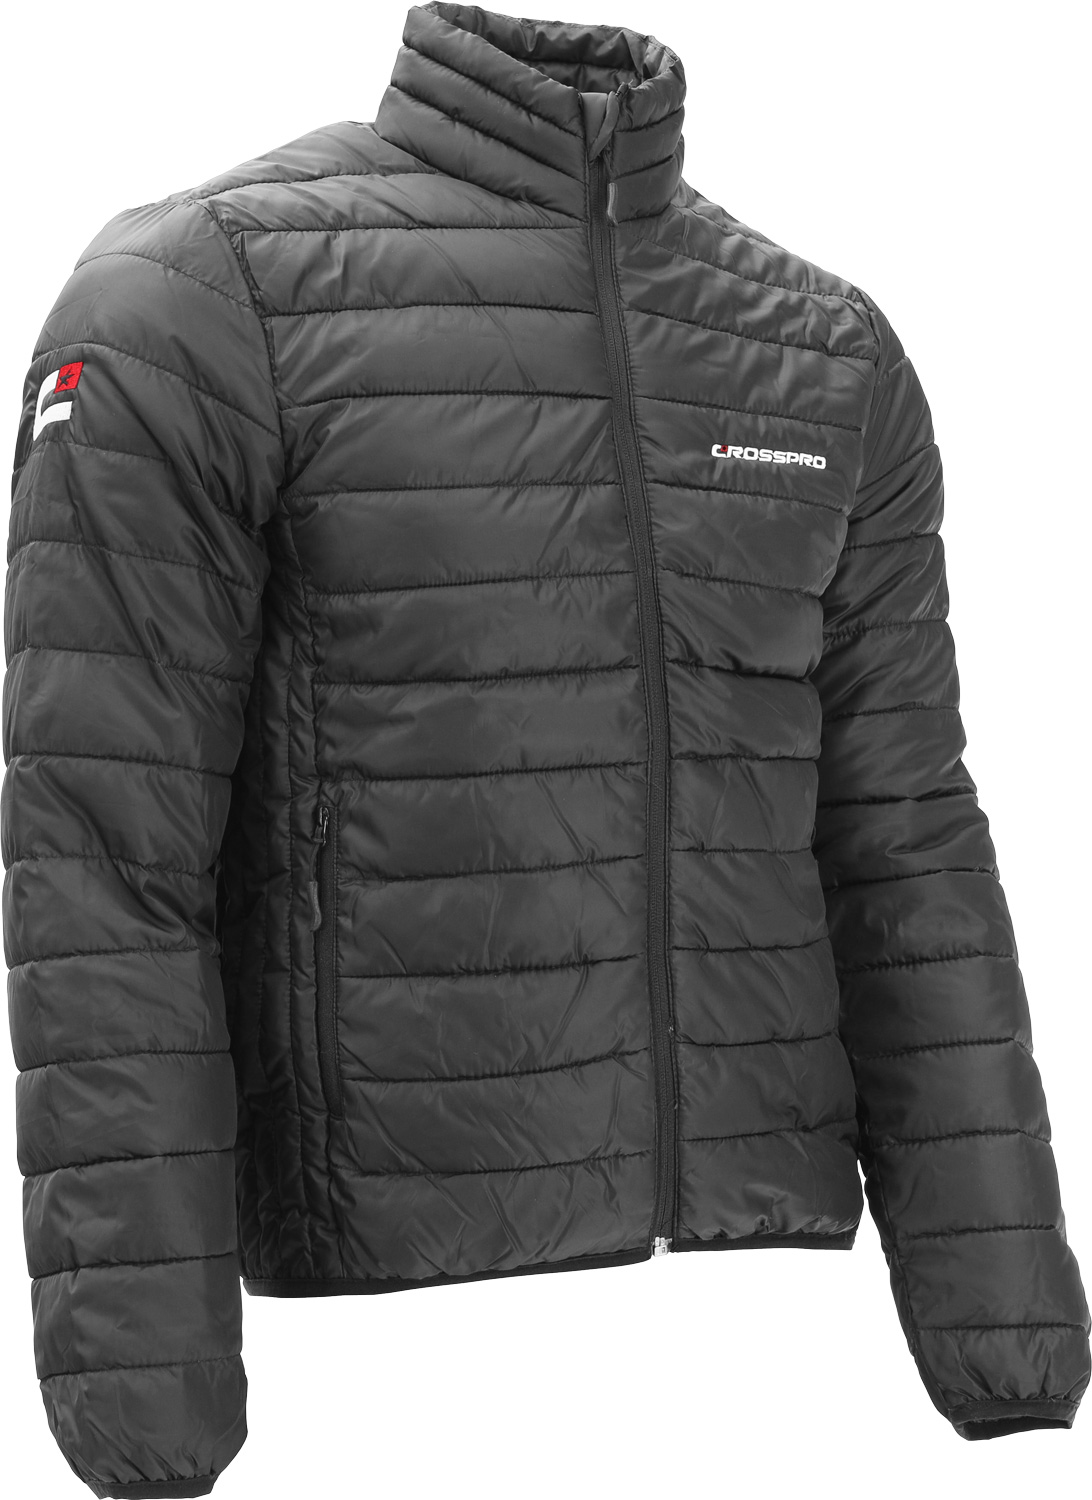 CrossPro Jacket Finland (L) Black